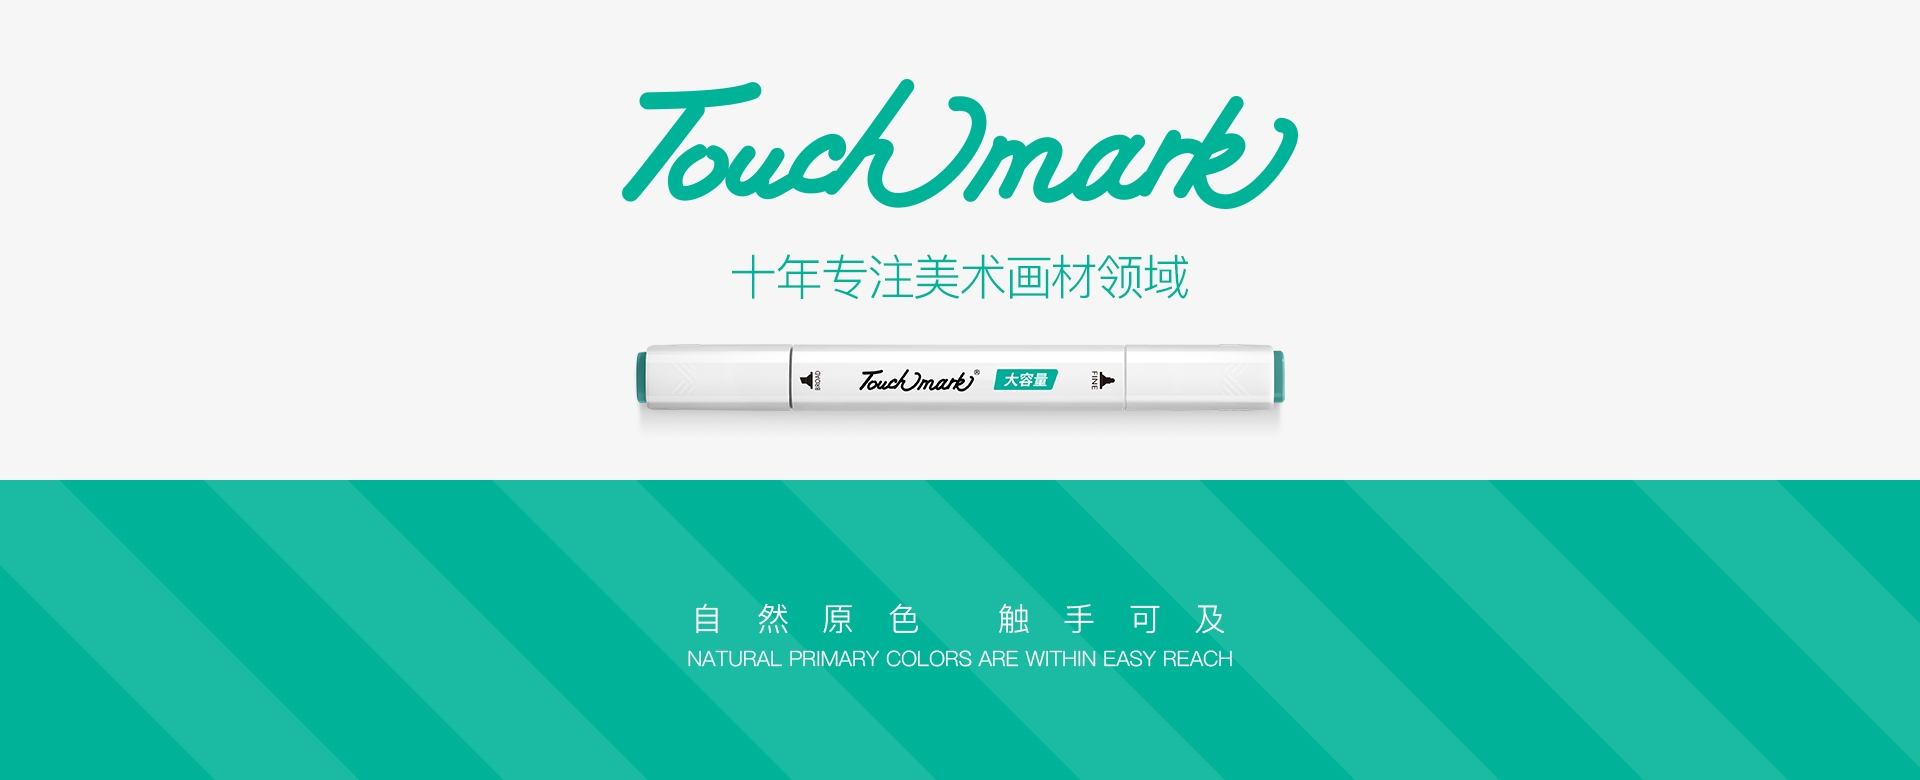 Touchmark官网，touchmark是一家专注于手绘设计、美术画材的美术用品品牌，Touchmark品牌产品有马克笔、固体水彩、针管笔、高光笔、自动铅笔、水彩画笔、纸张本册等产品